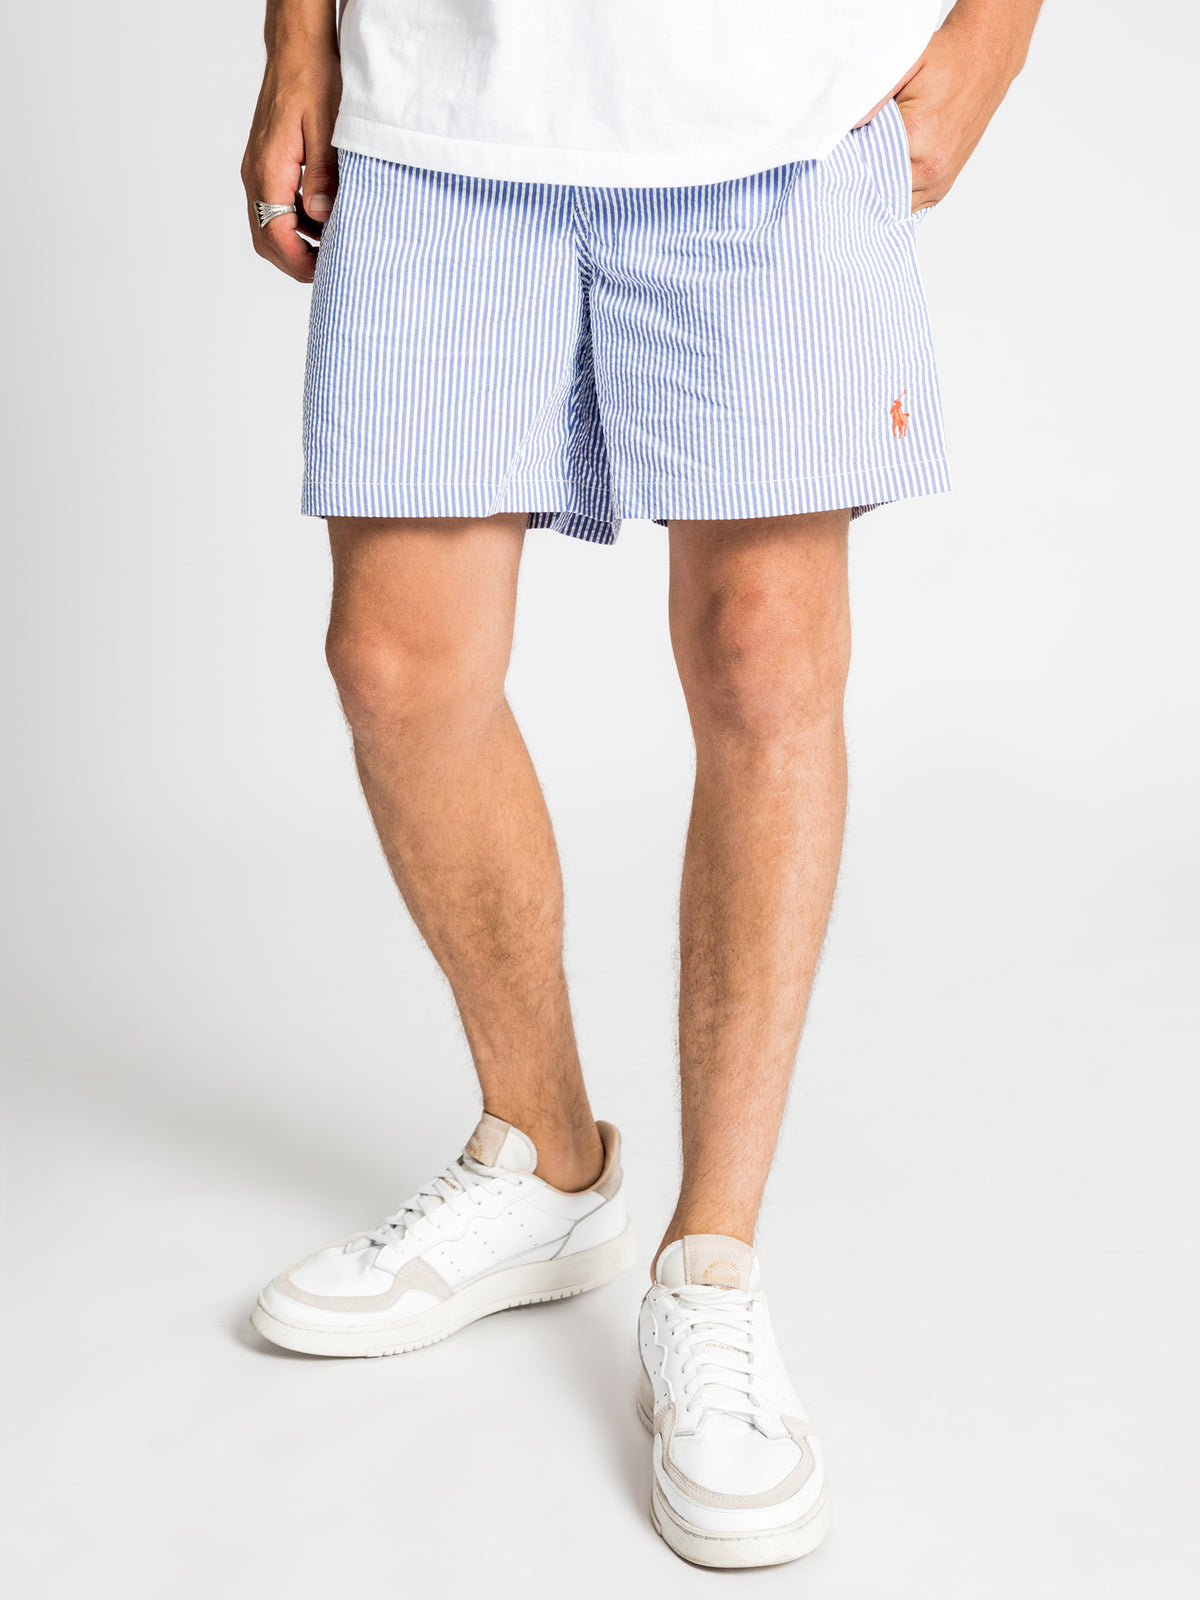 Traveller Shorts in Blue Stripe